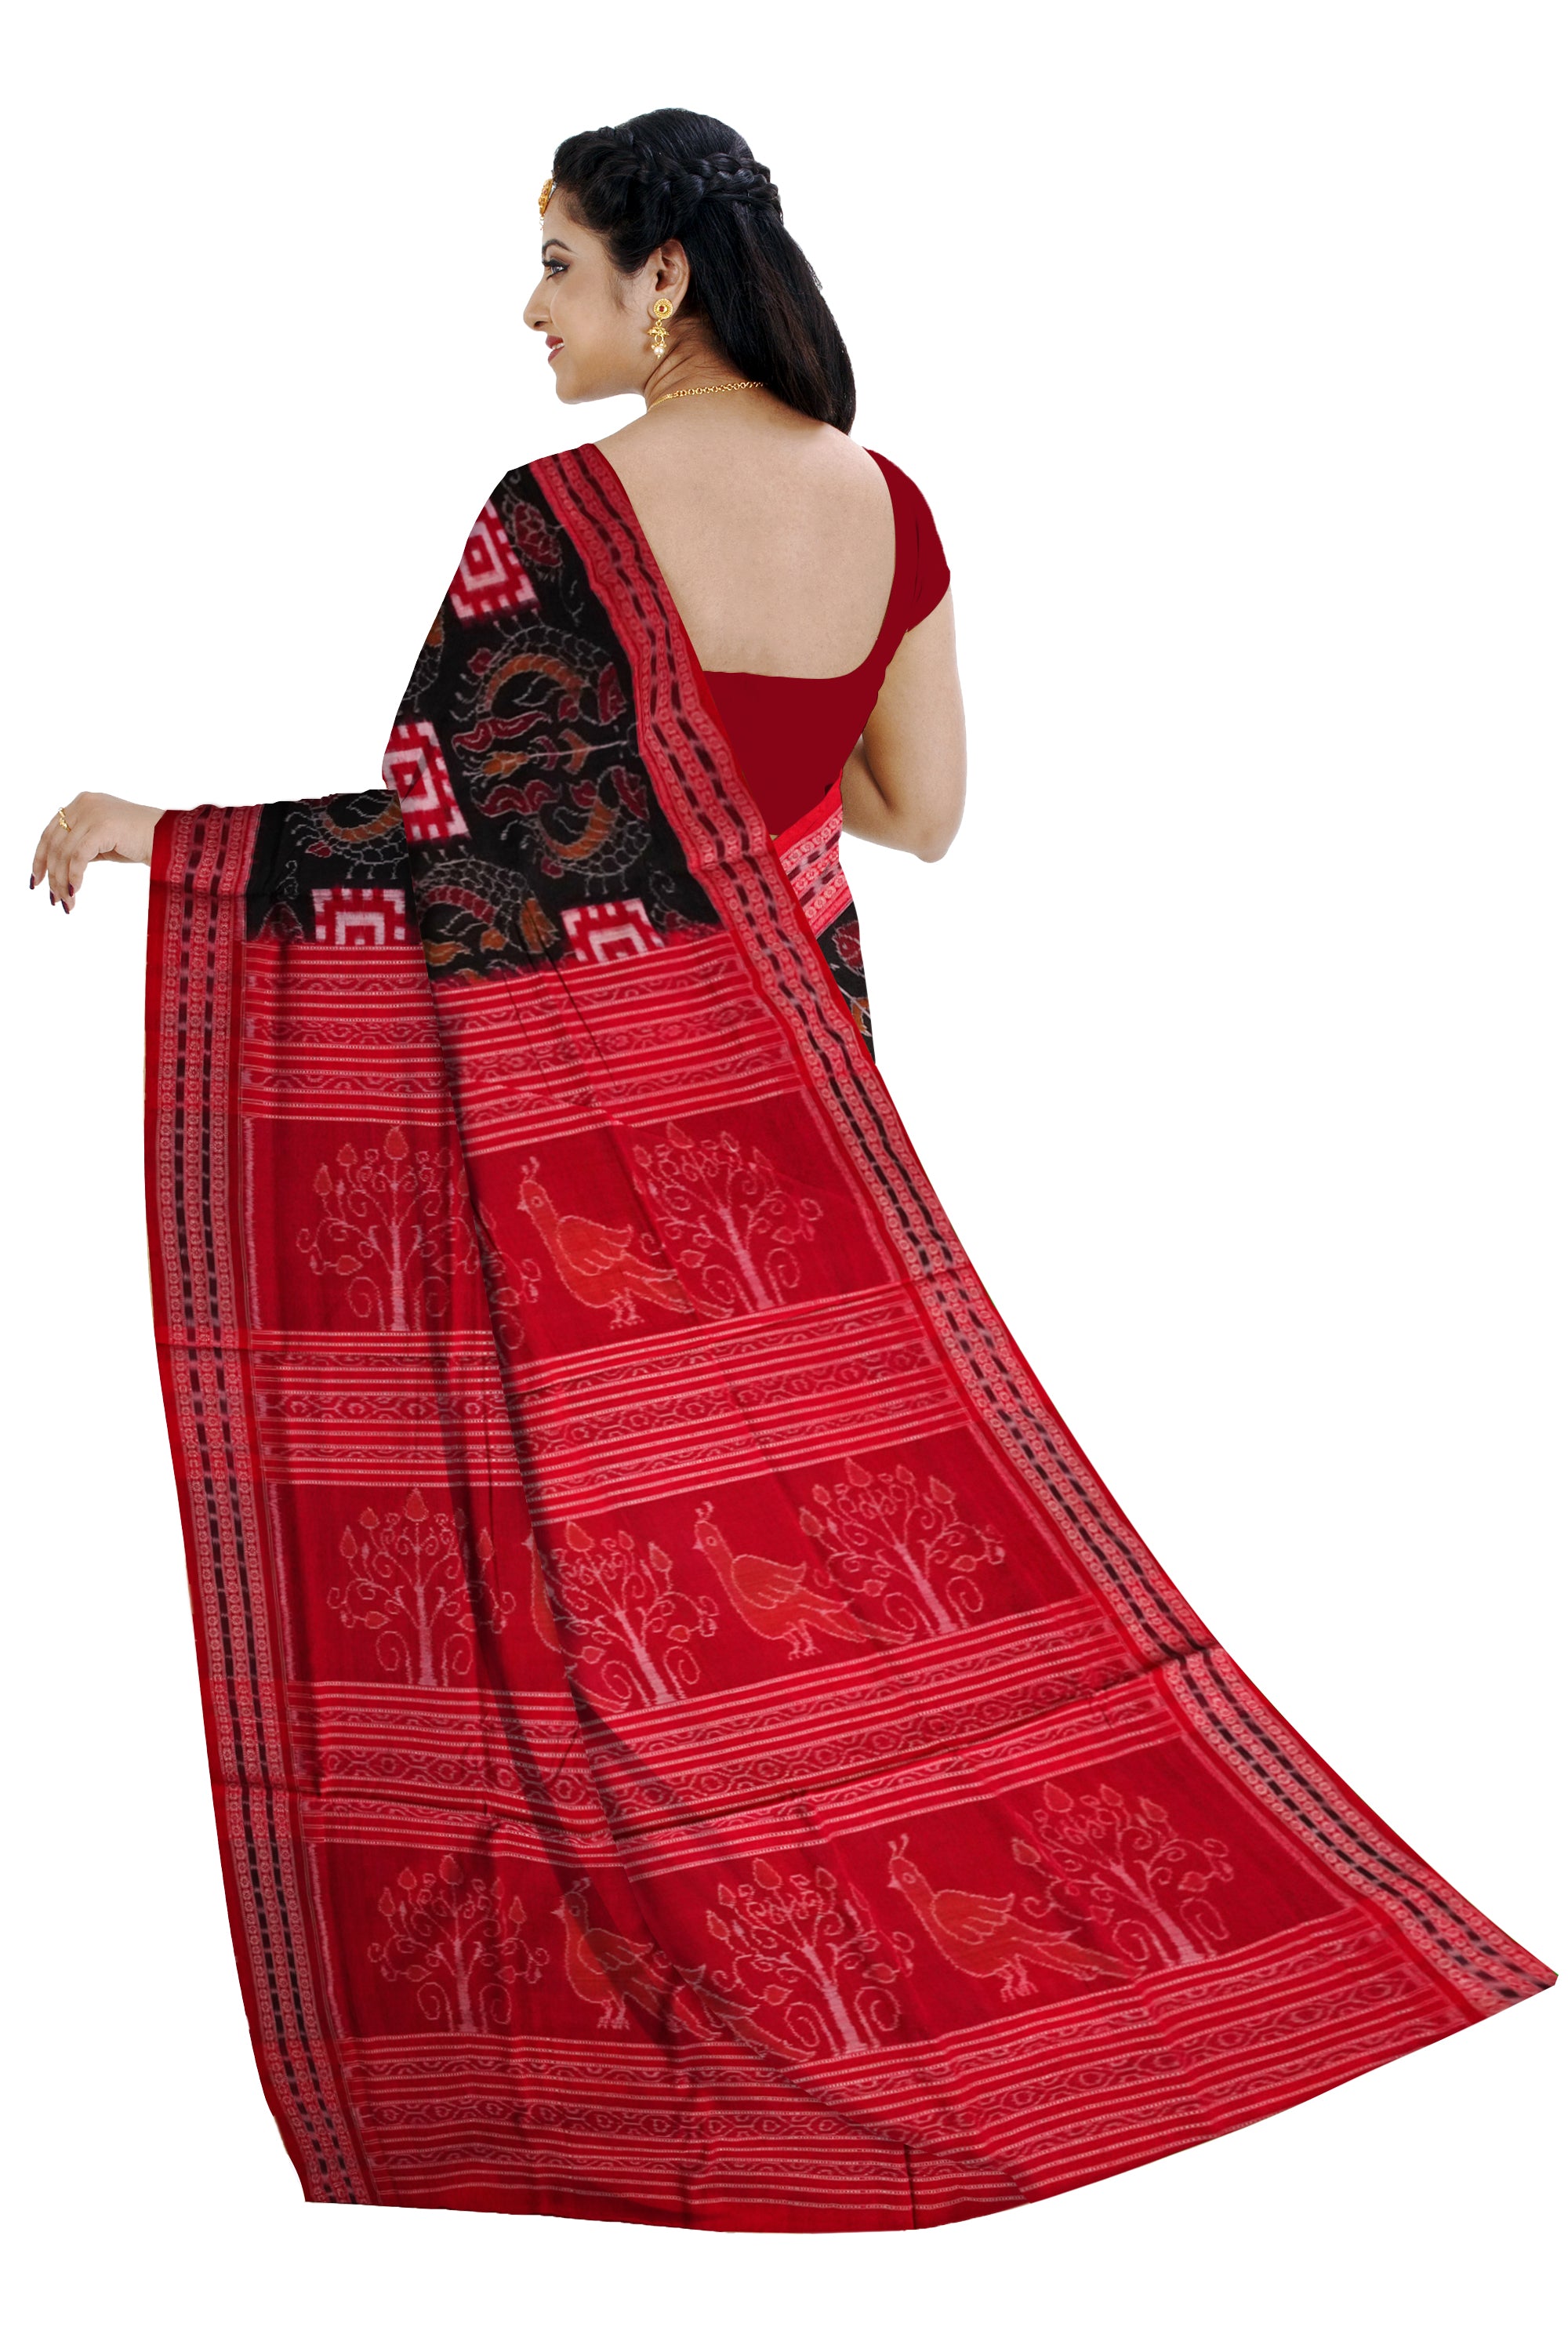 Black and Red color box and fish pattern sambalpuri cotton saree. - Koshali Arts & Crafts Enterprise